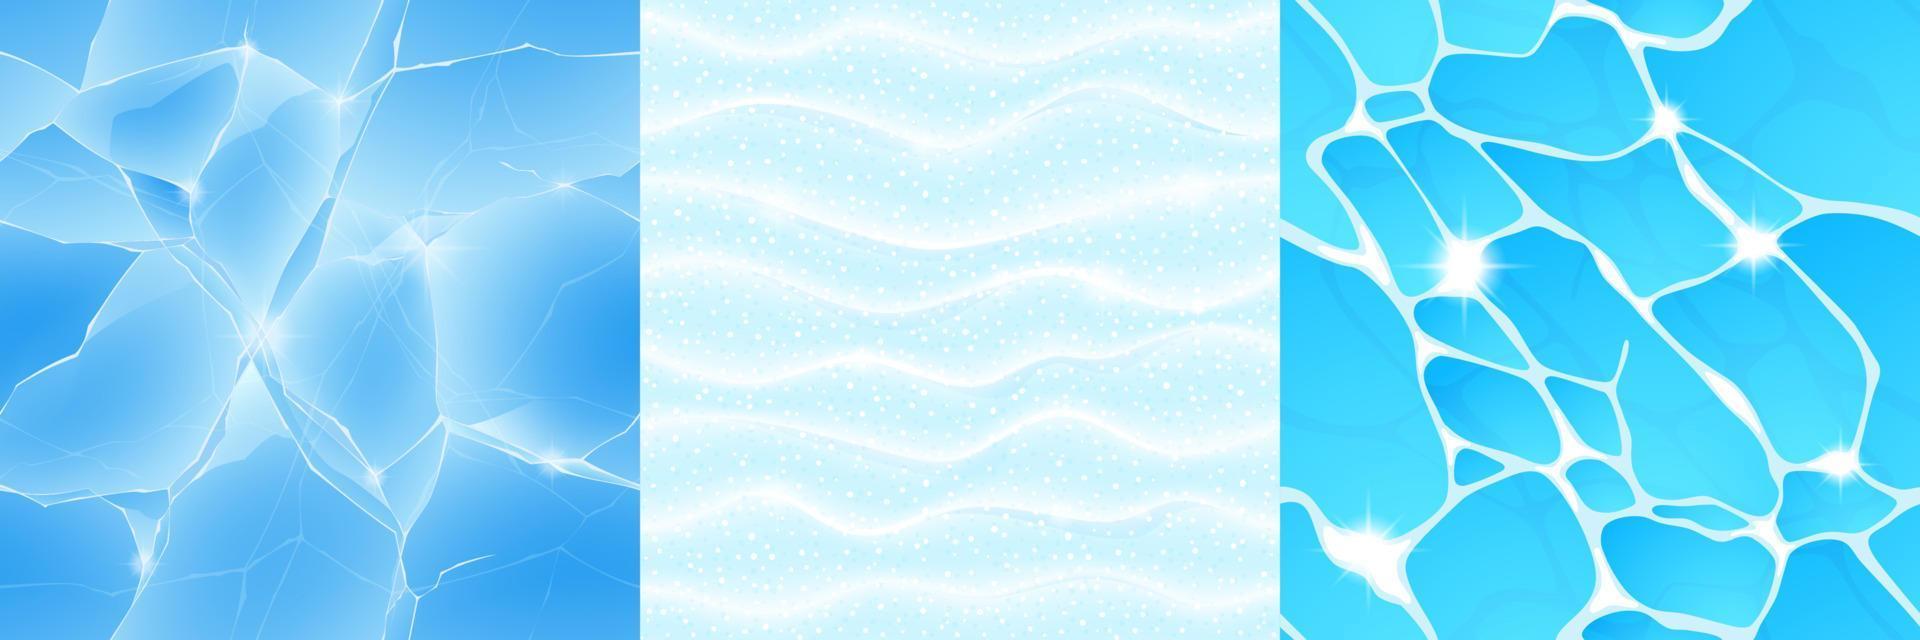 juego de texturas de hielo, nieve, patrón transparente de agua vector